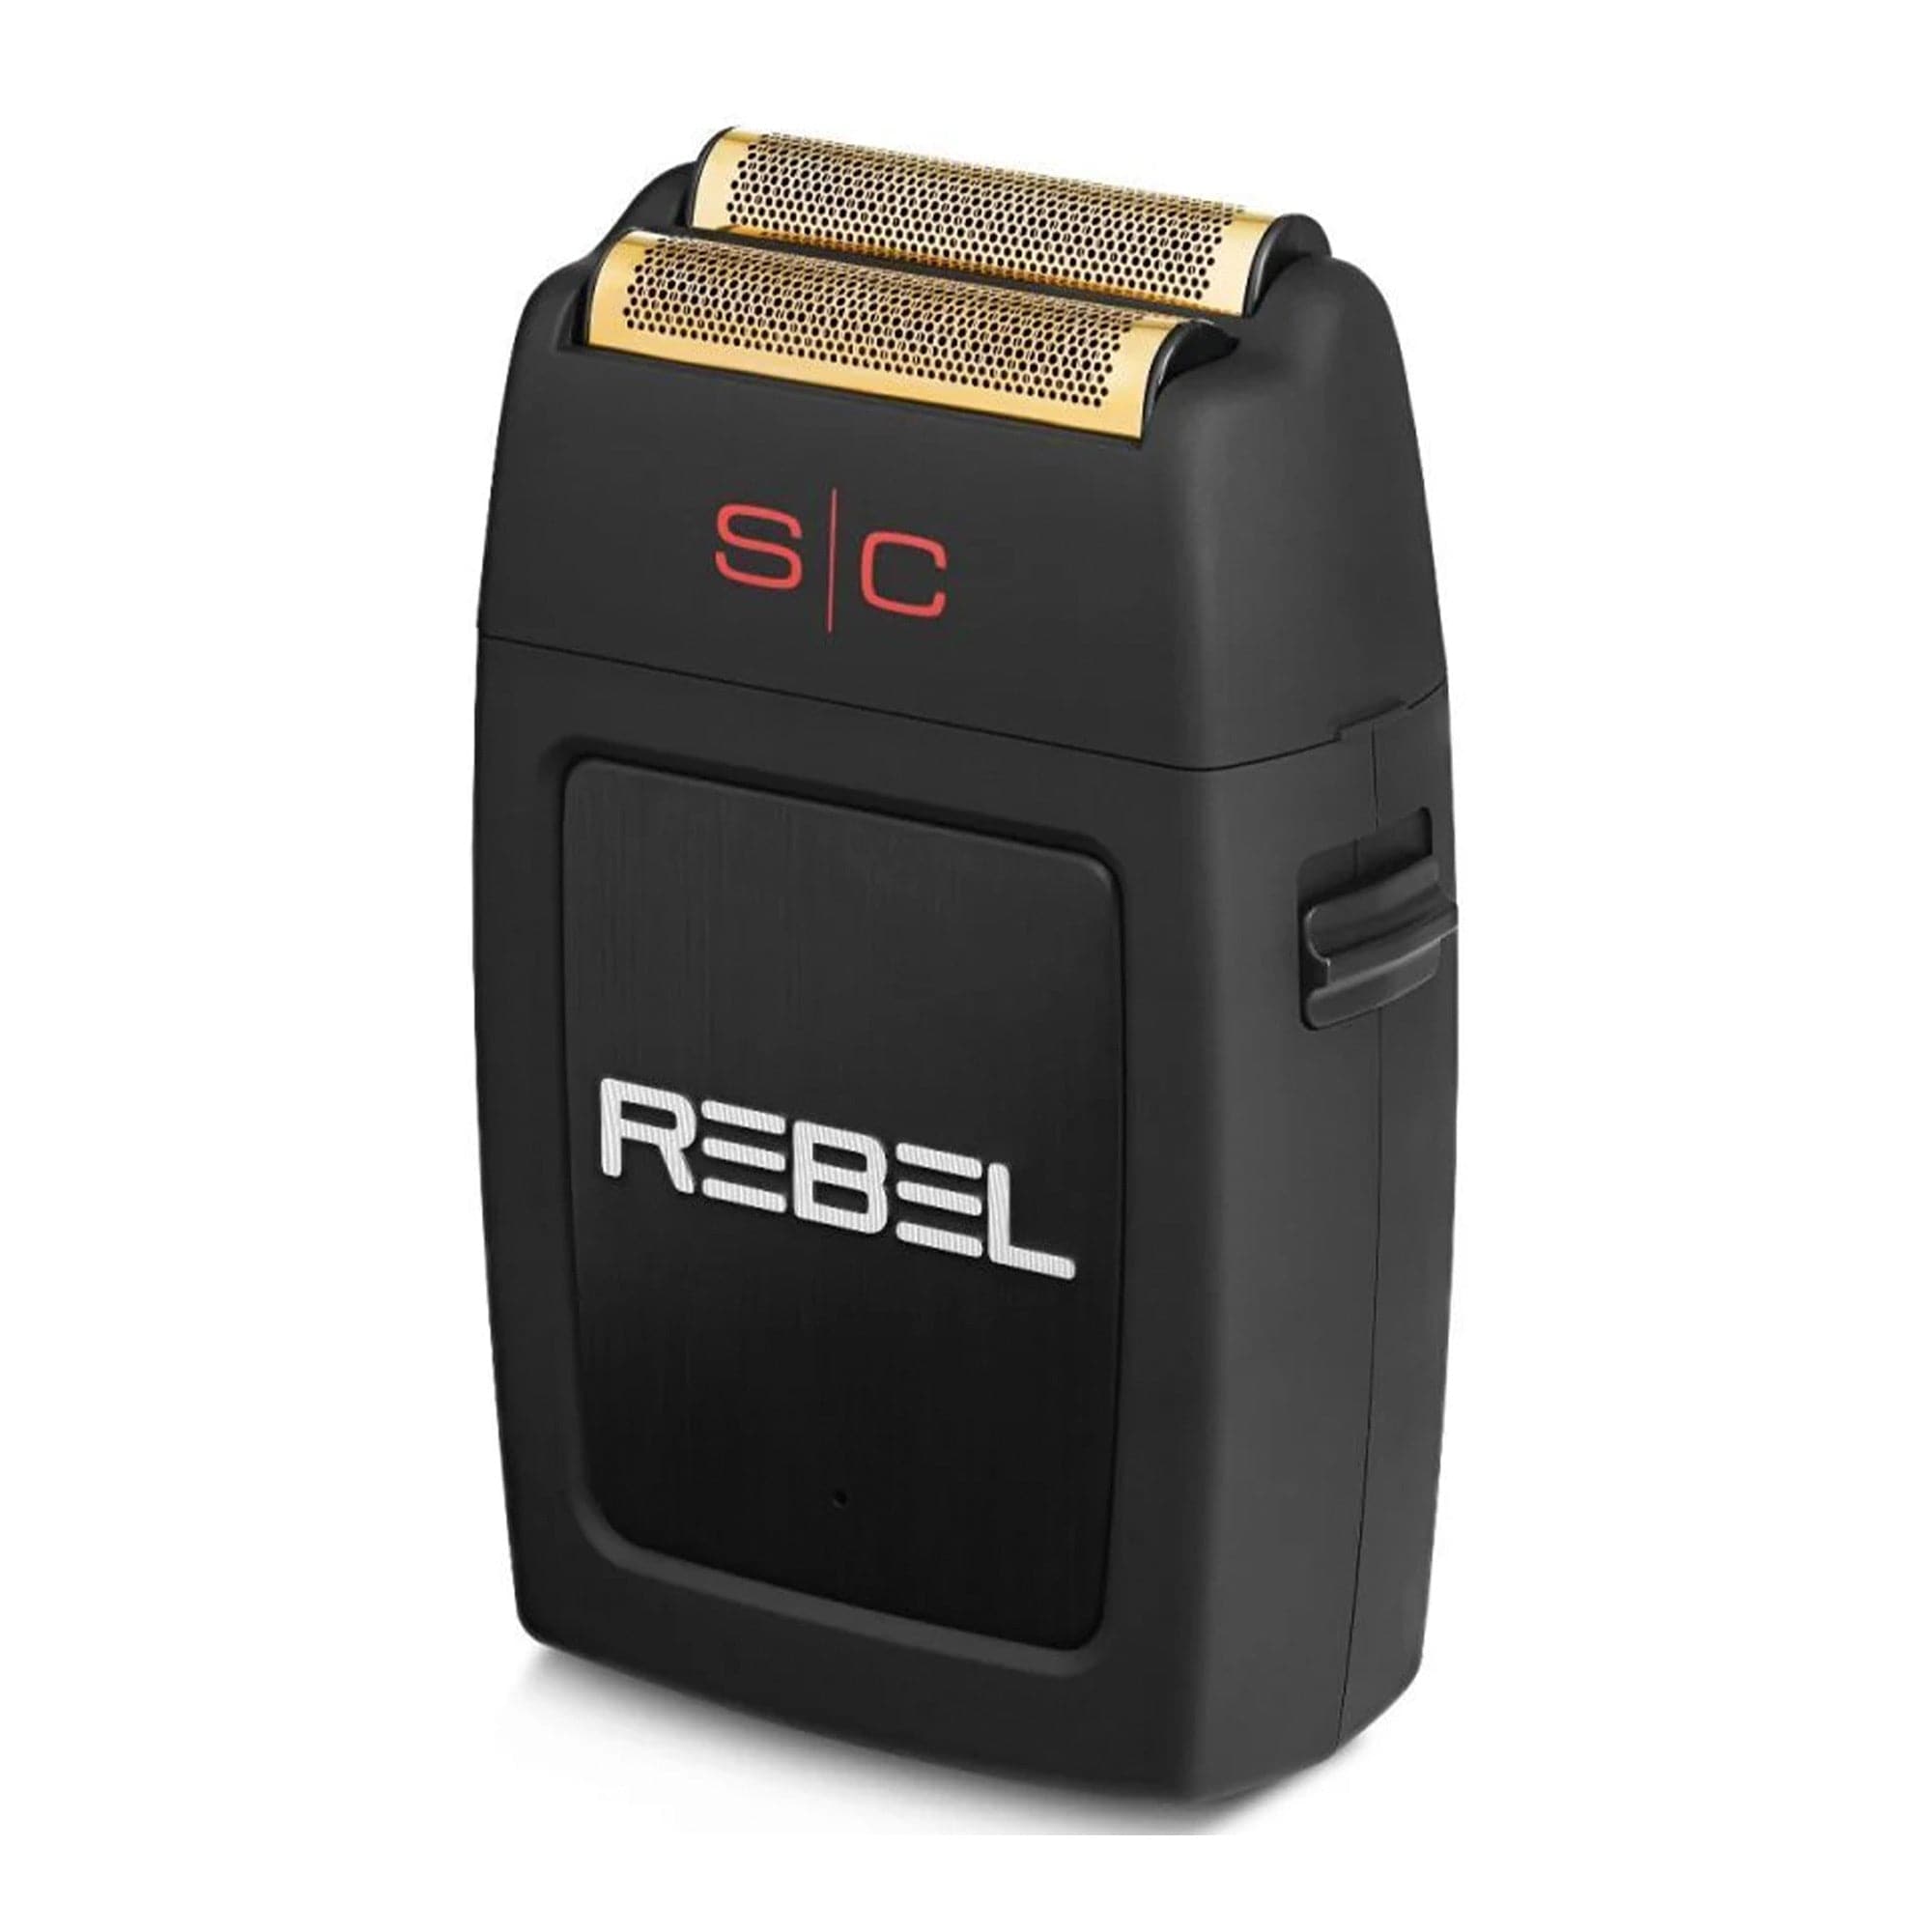 StyleCraft - SC Rebel Super Torque Motor Shaver